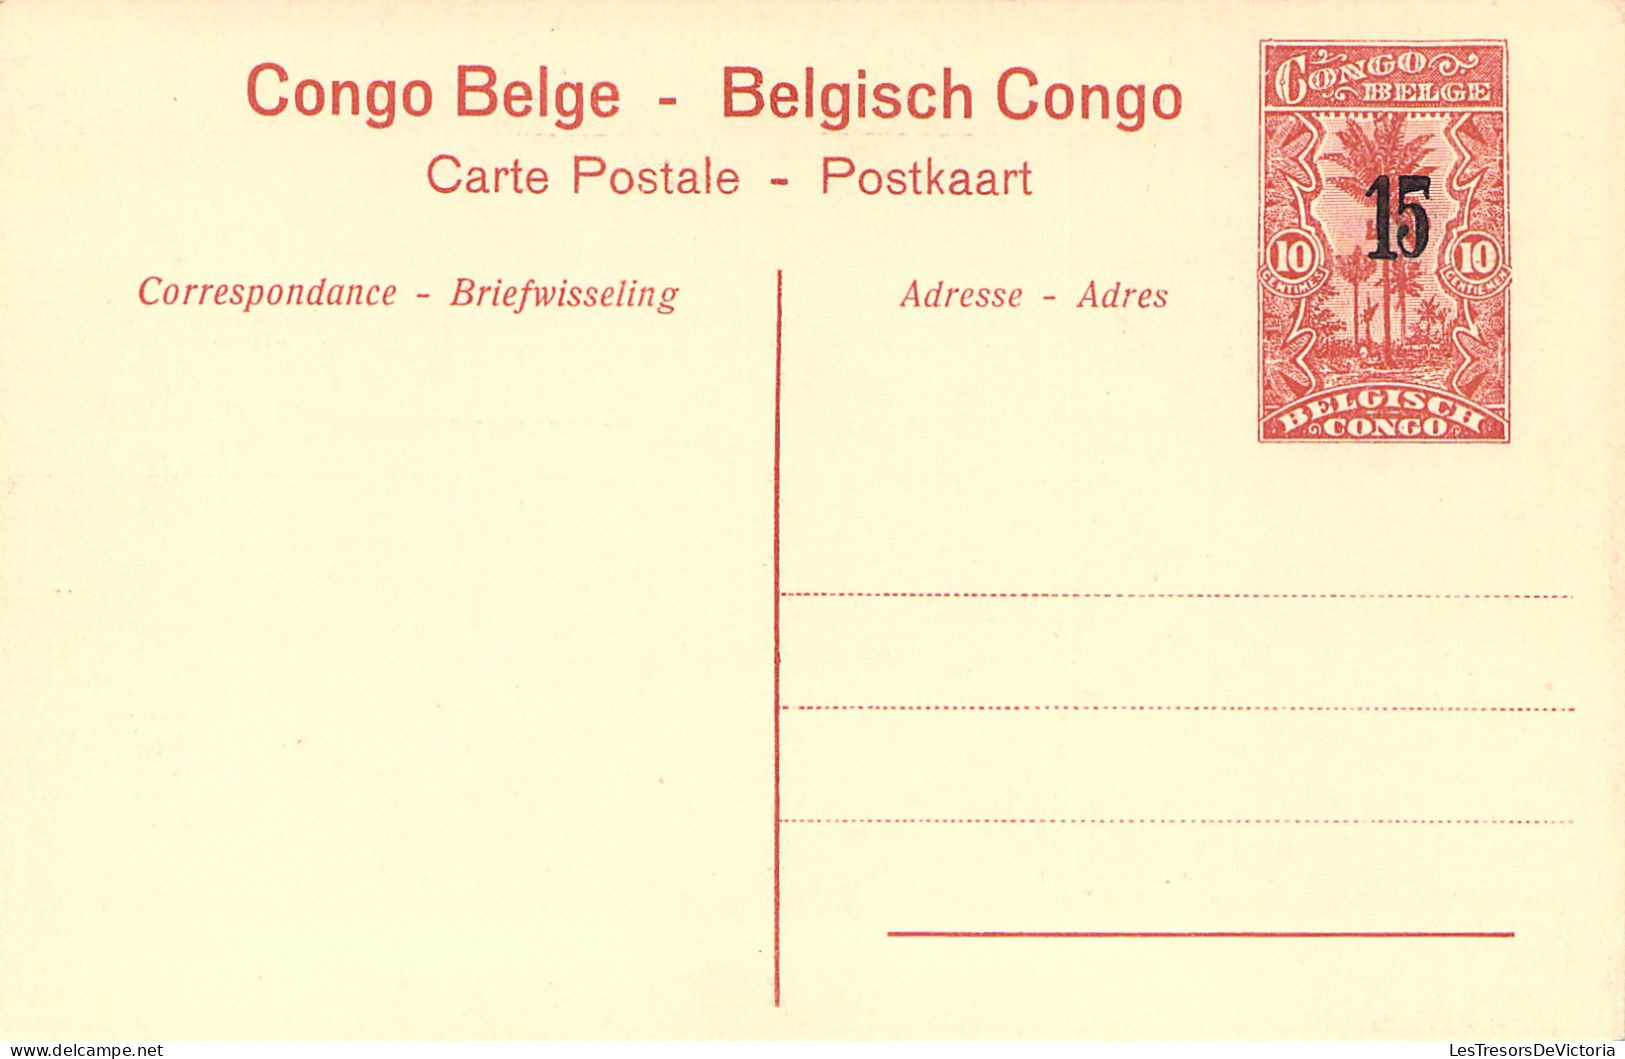 Congo Belge - Village Bateke Pres Leopoldville - Entier Postal - Carte Postale Ancienne - Congo Belge